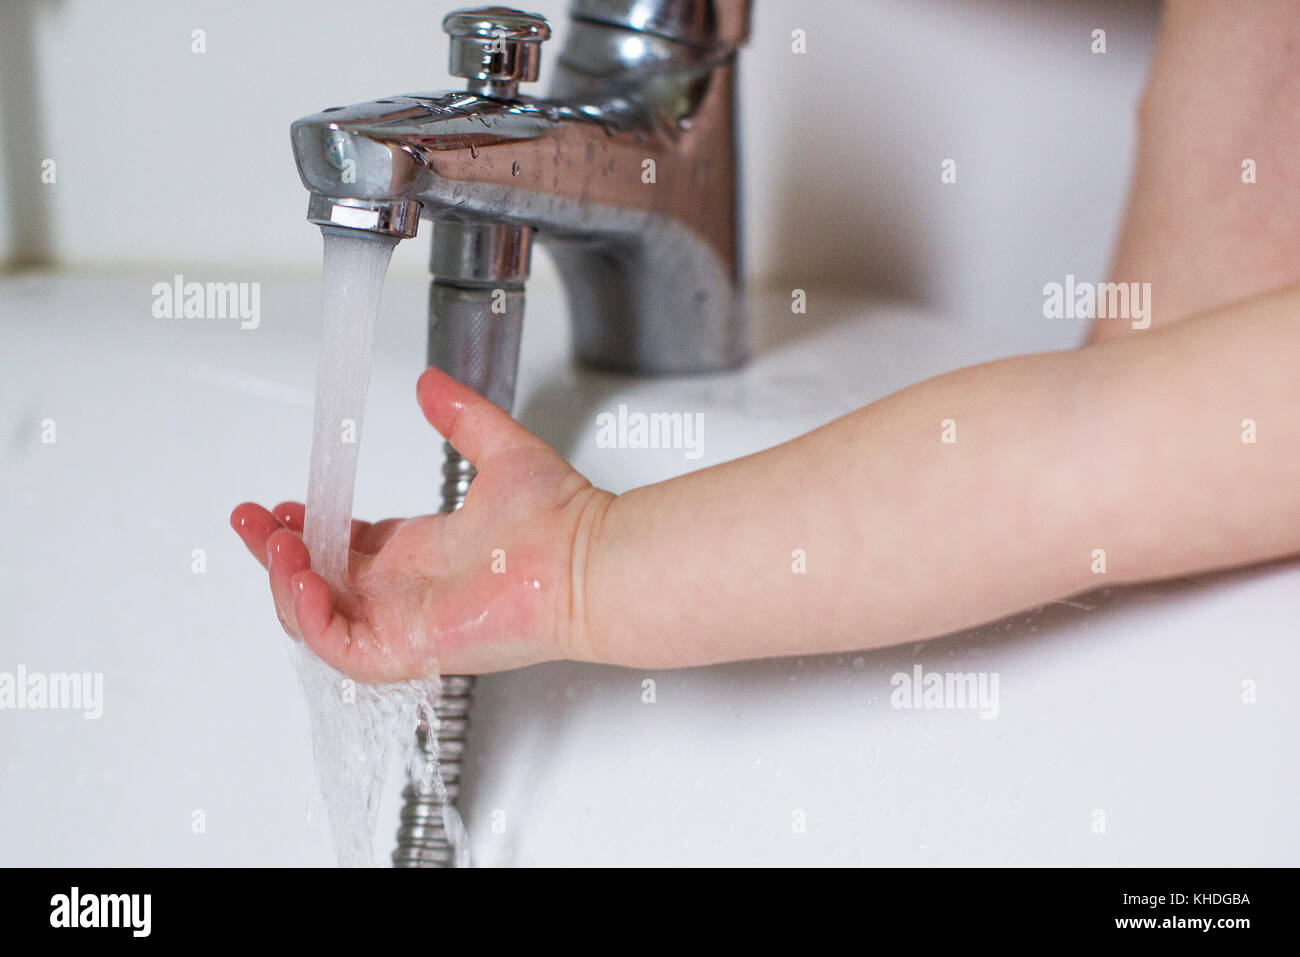 Child's hand testing bath water temperature Stock Photo